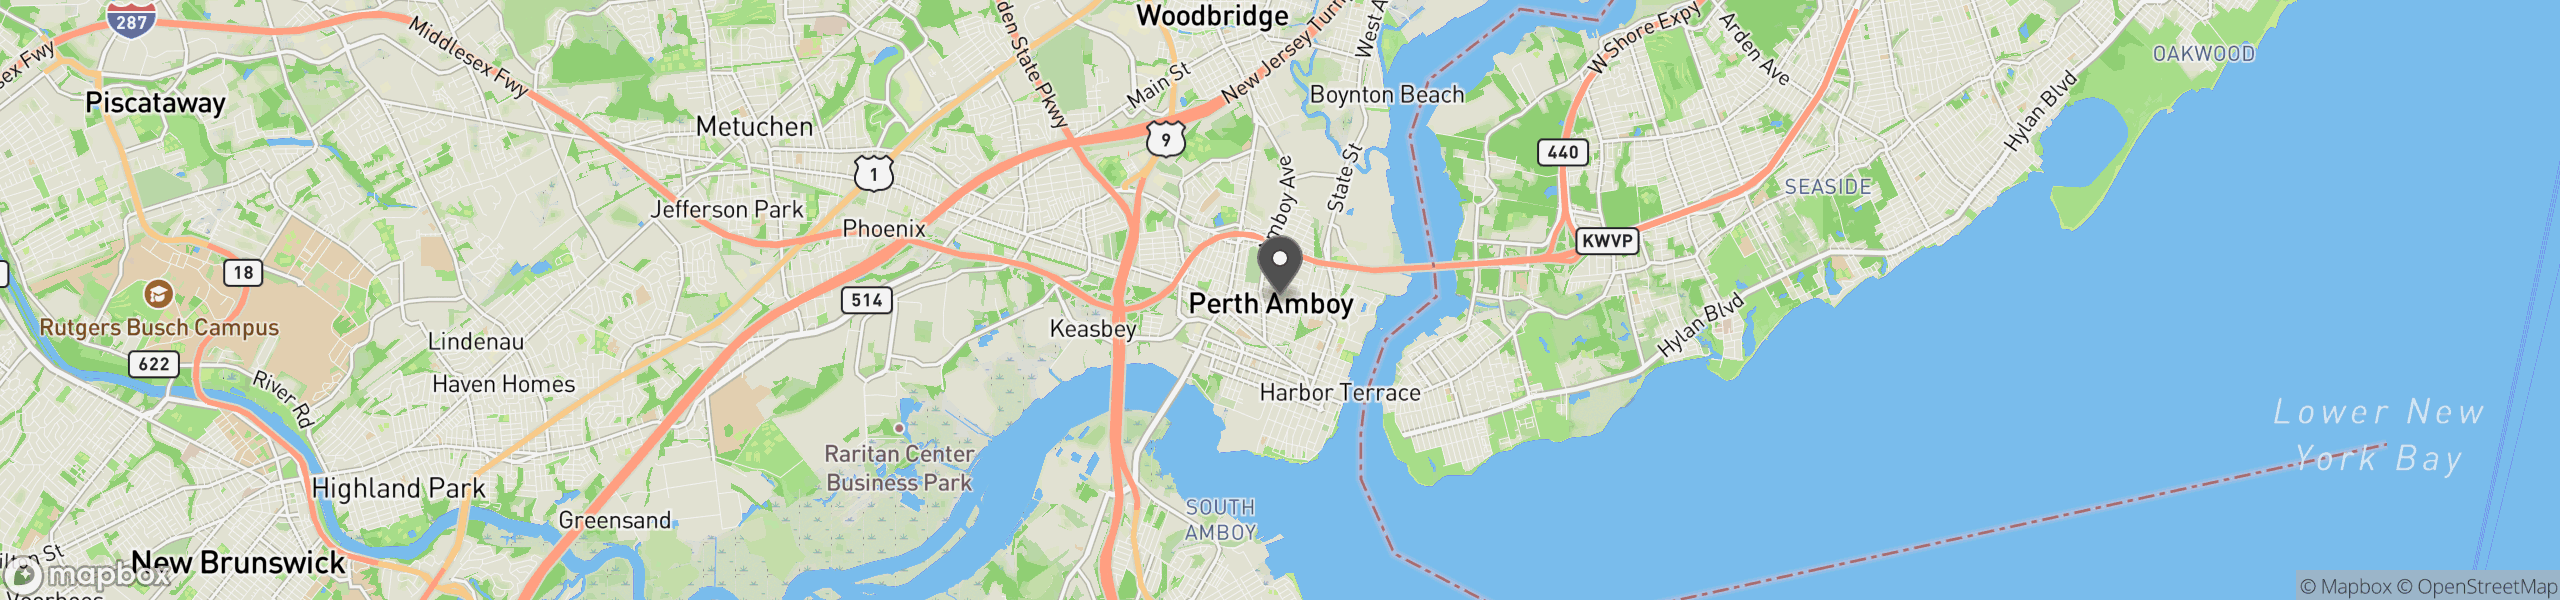 Perth Amboy, NJ